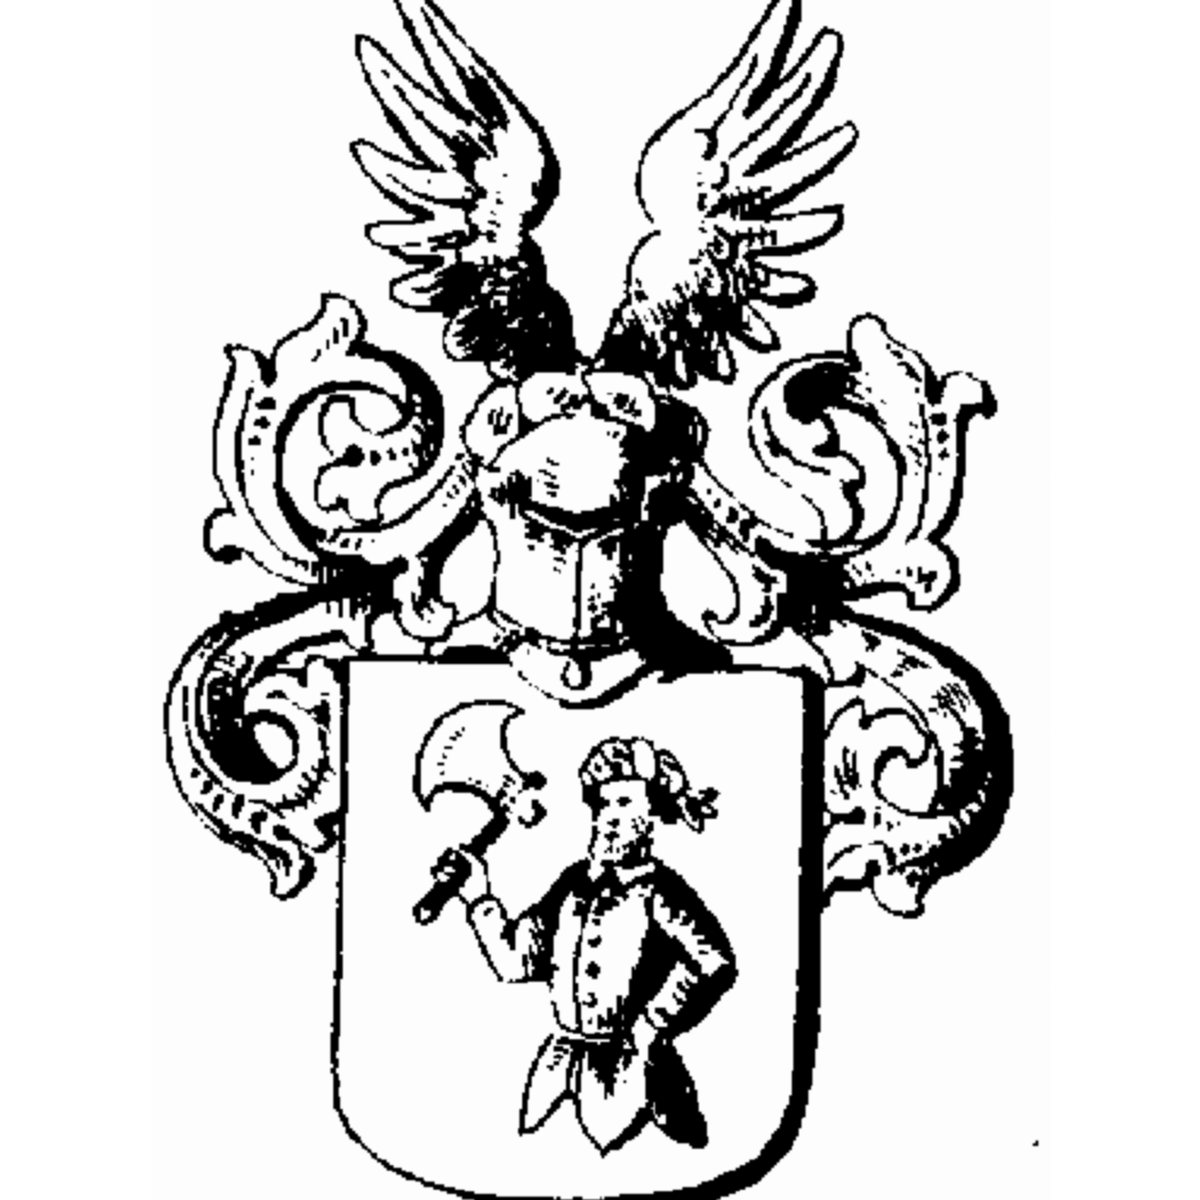 Wappen der Familie Berengeri